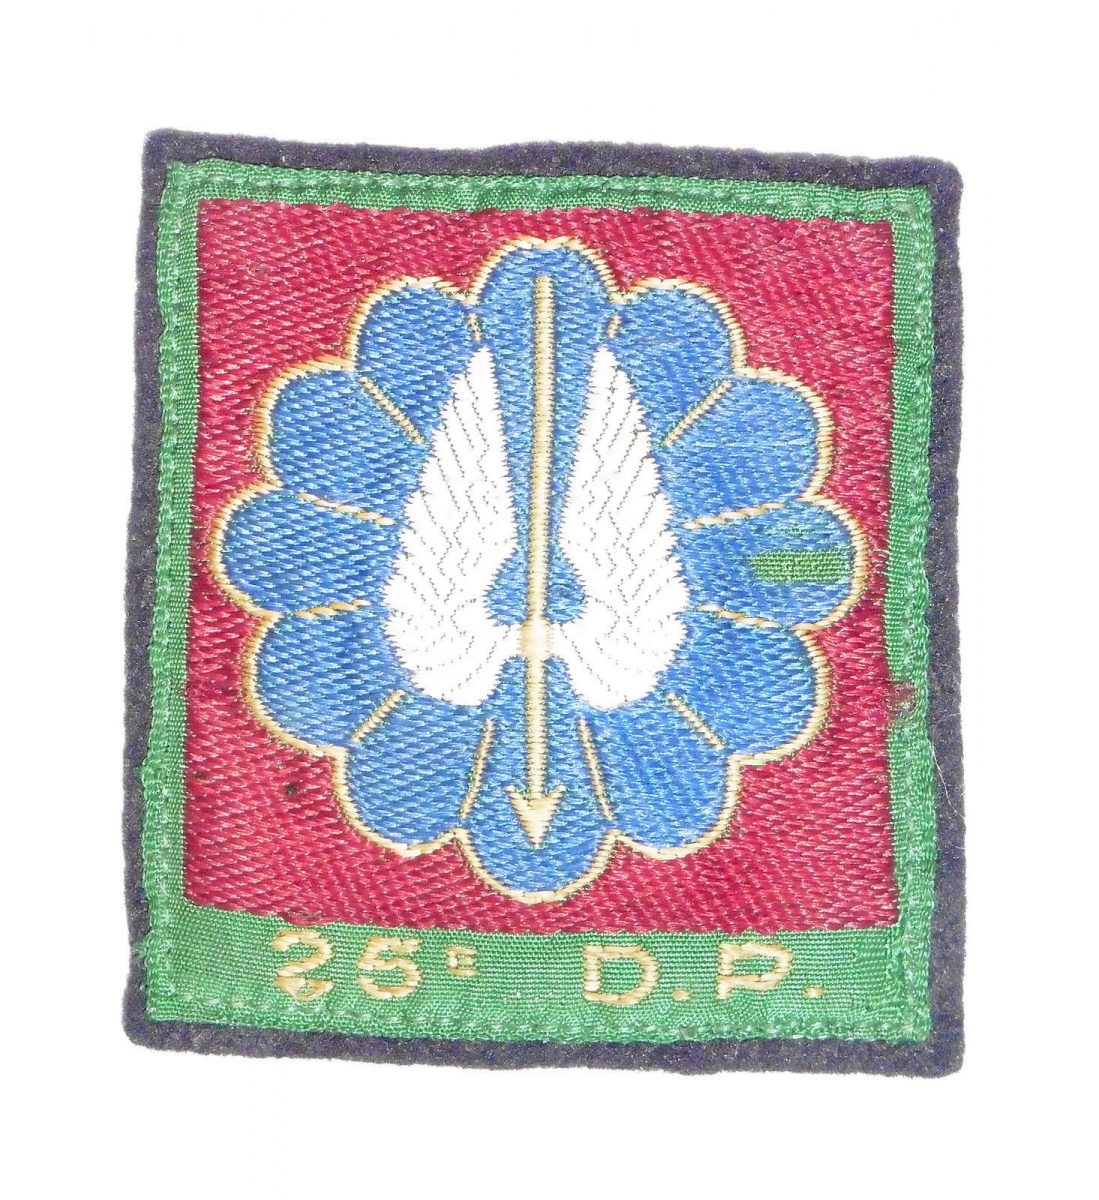 25th Airborne Division( obsolete)